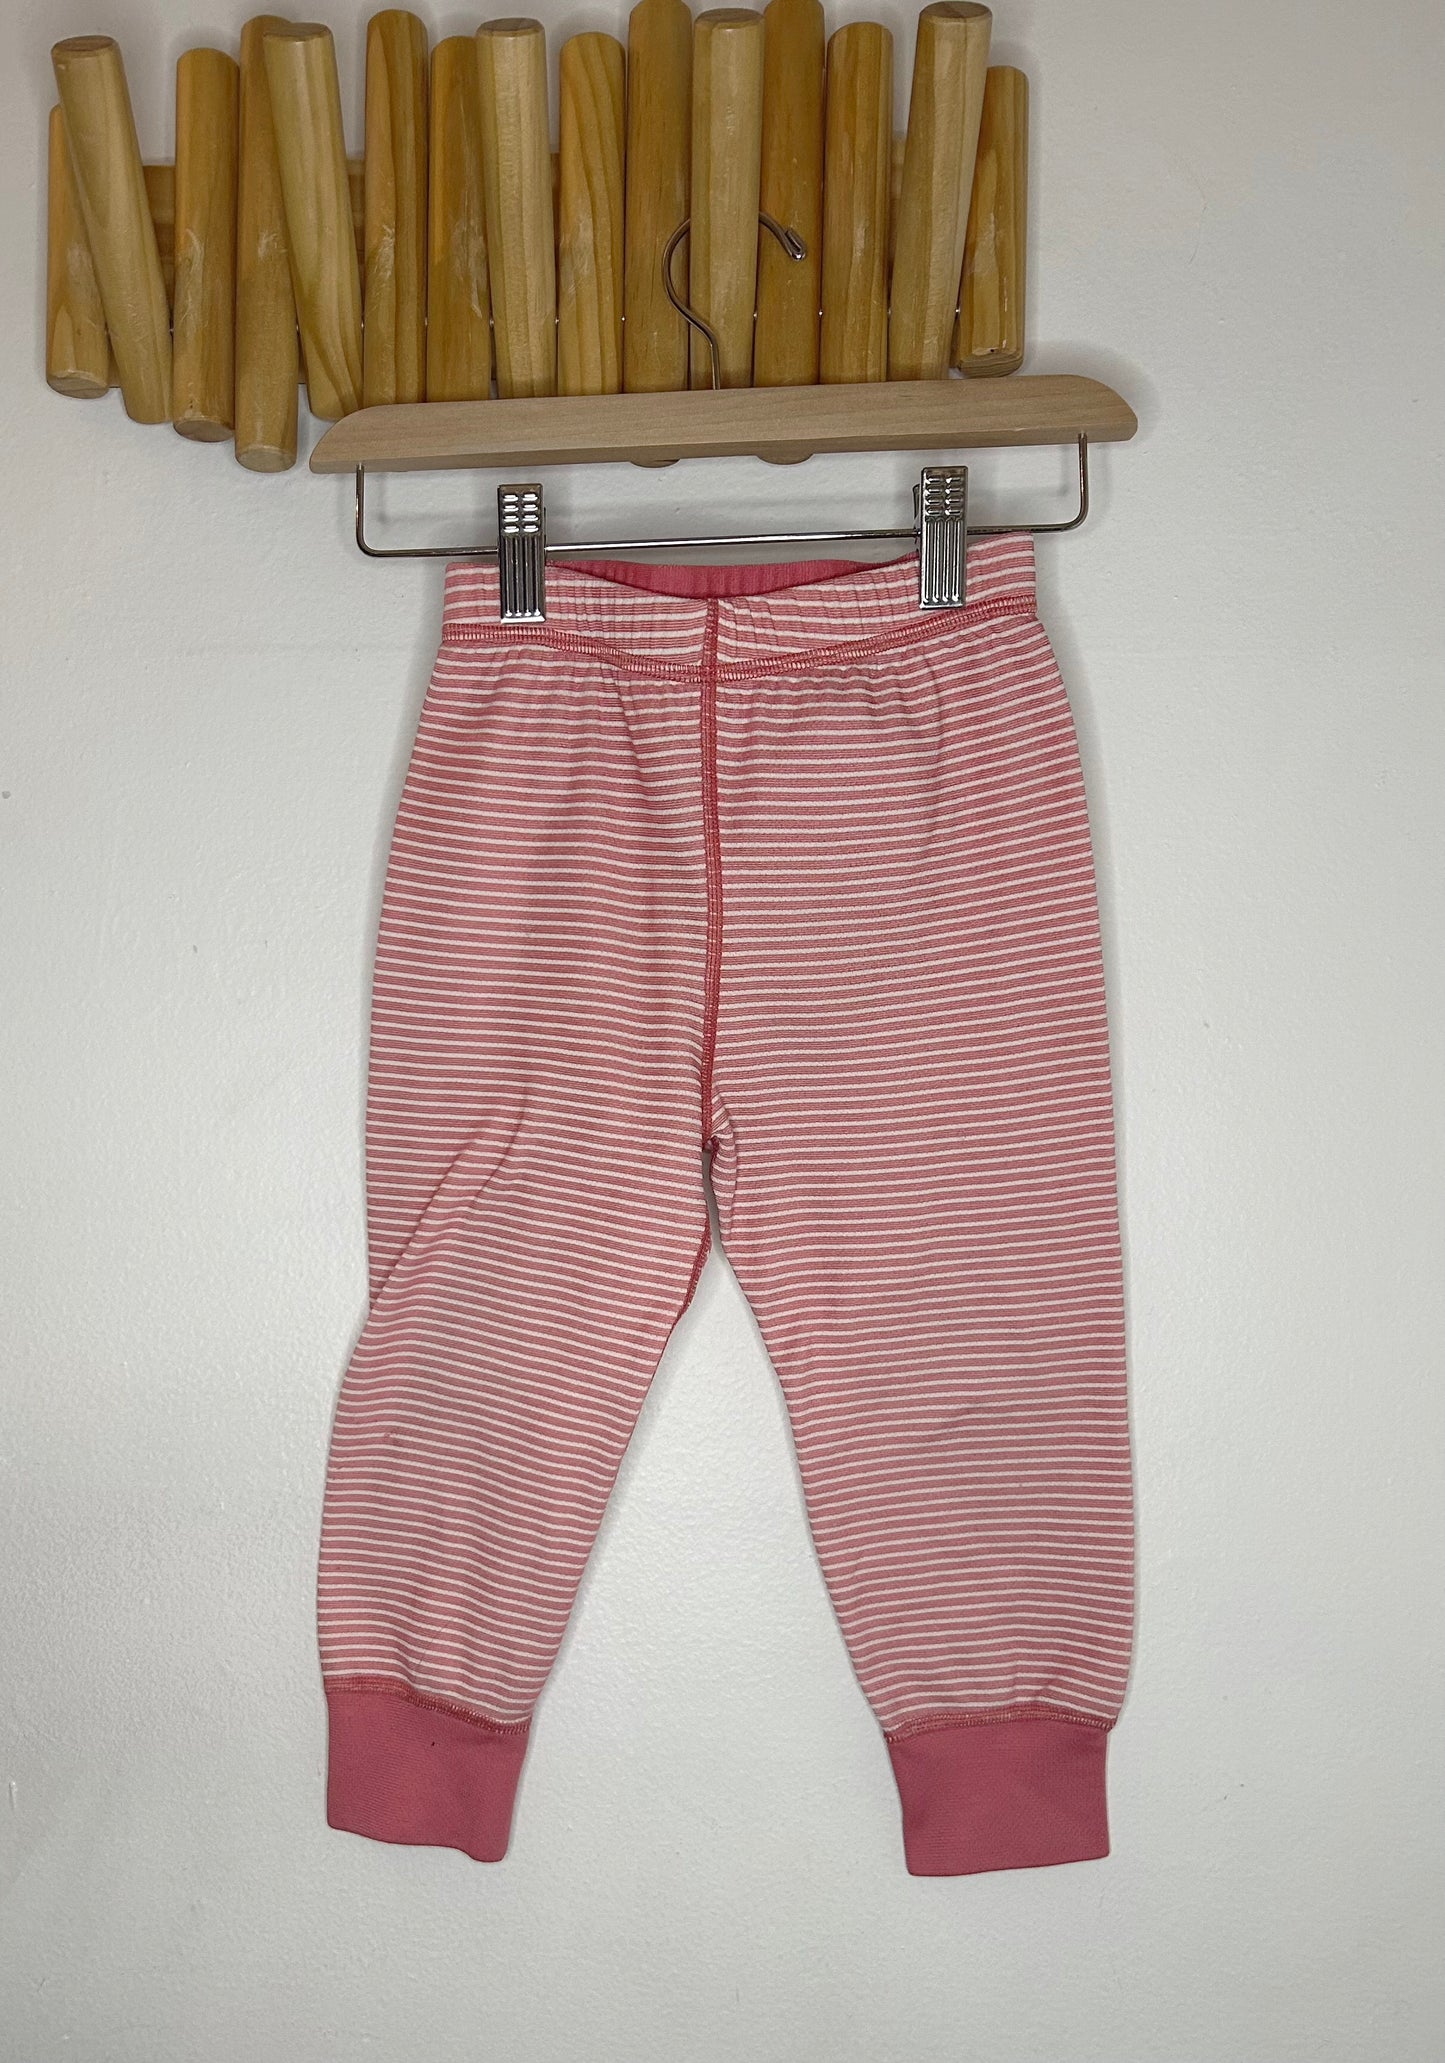 Pink striped thermal pants 24m*